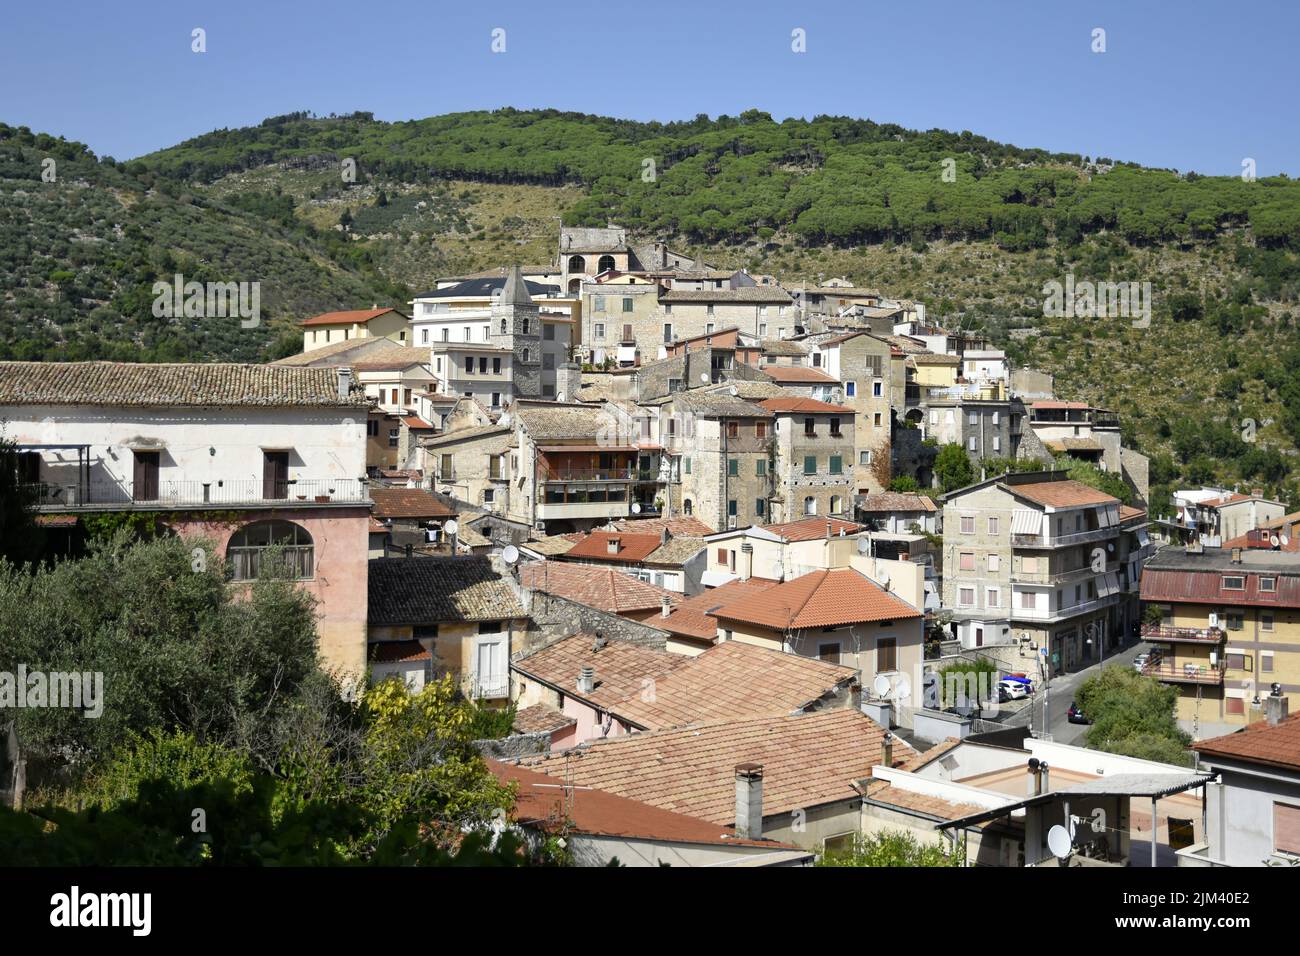 The old architecture of Lenola. Province of Latina, Lazio region, central Italy. Stock Photo